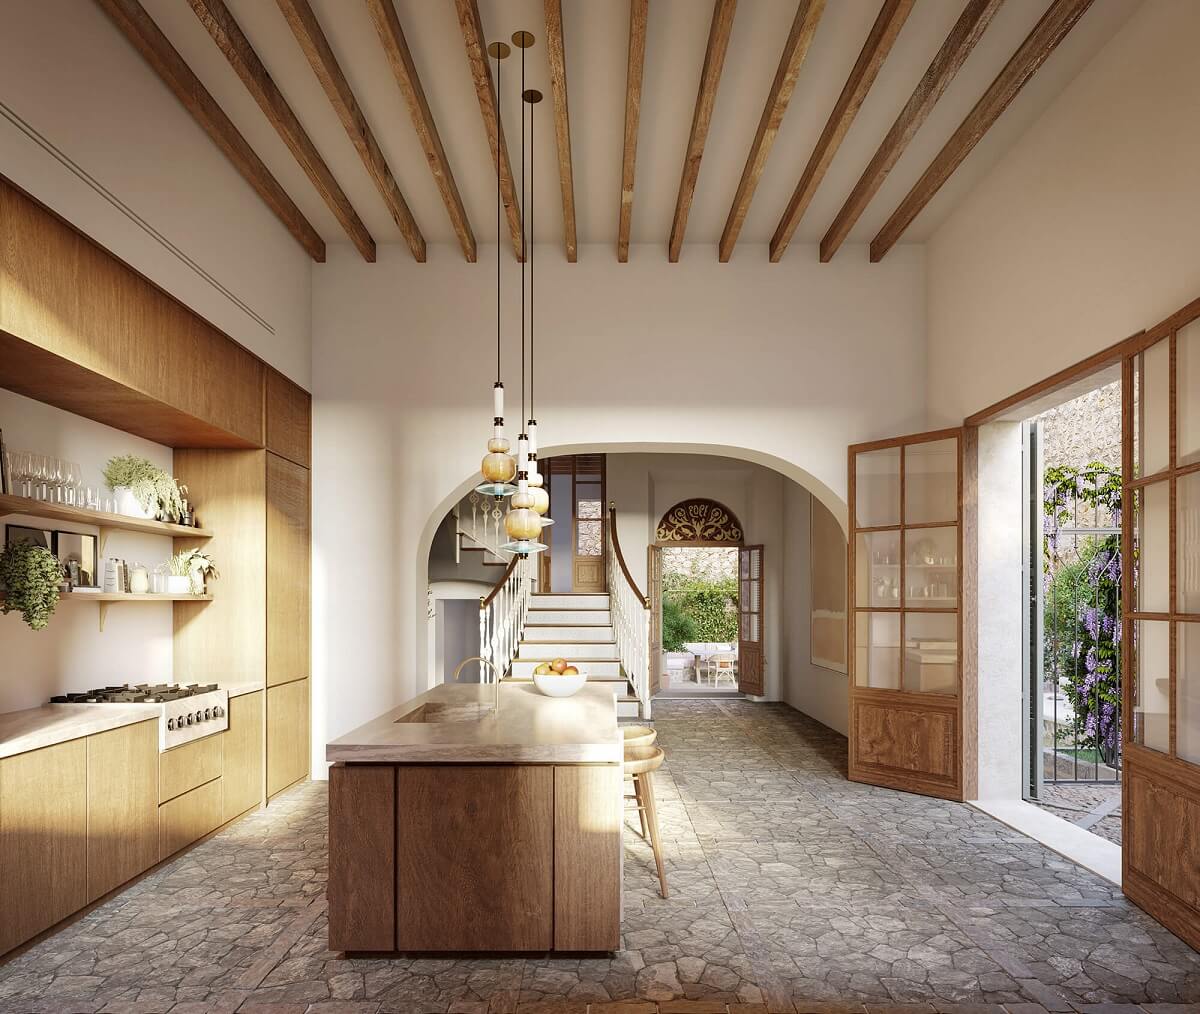 kitchen-wood-exposed-wooden-beams-stone-floor-kitchen-island-townhouse-mallorca-nordroom